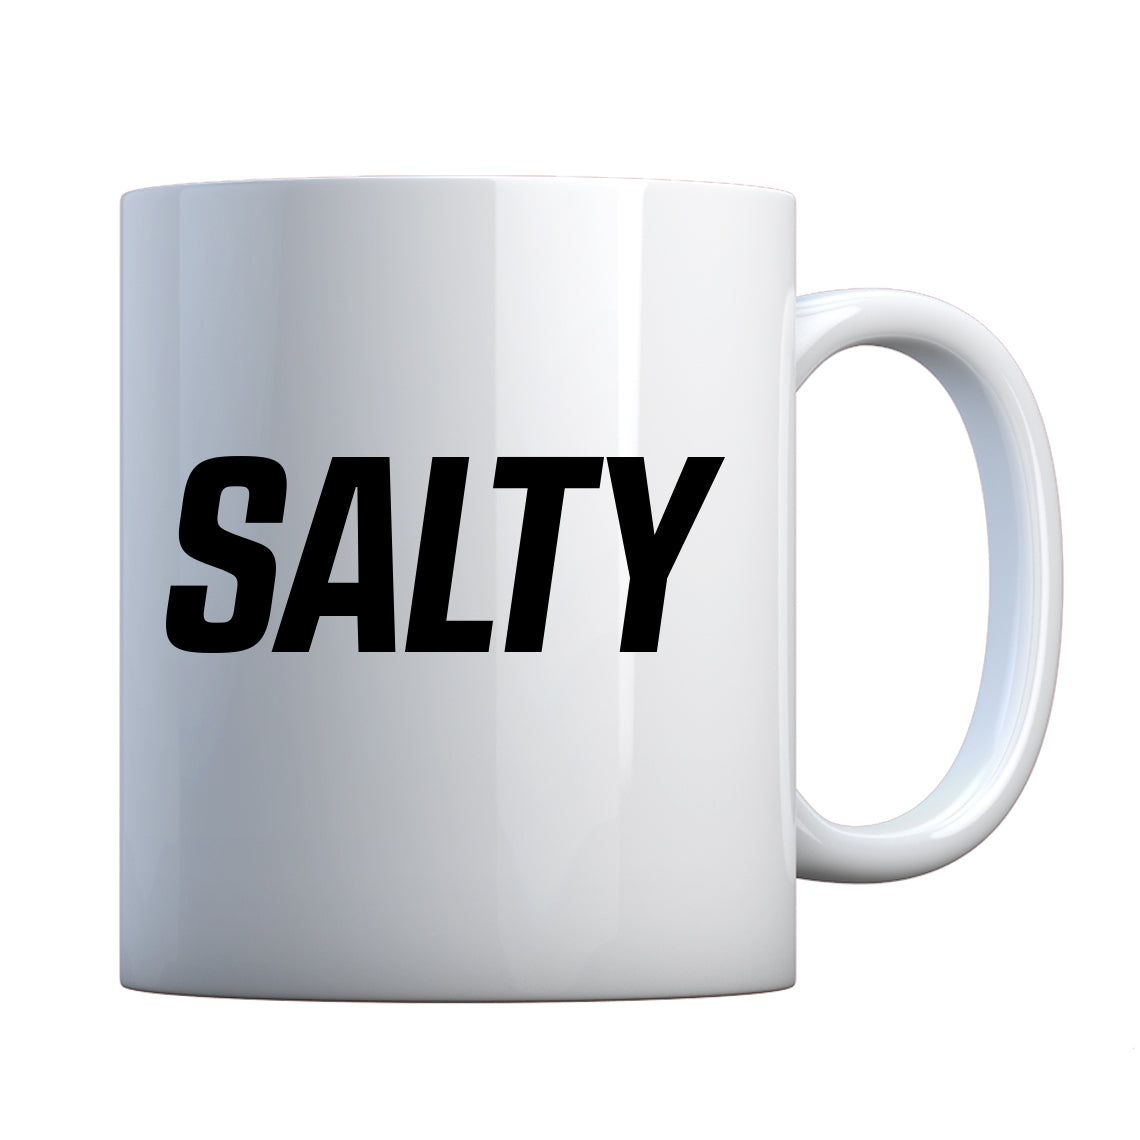 Salty Ceramic Gift Mug